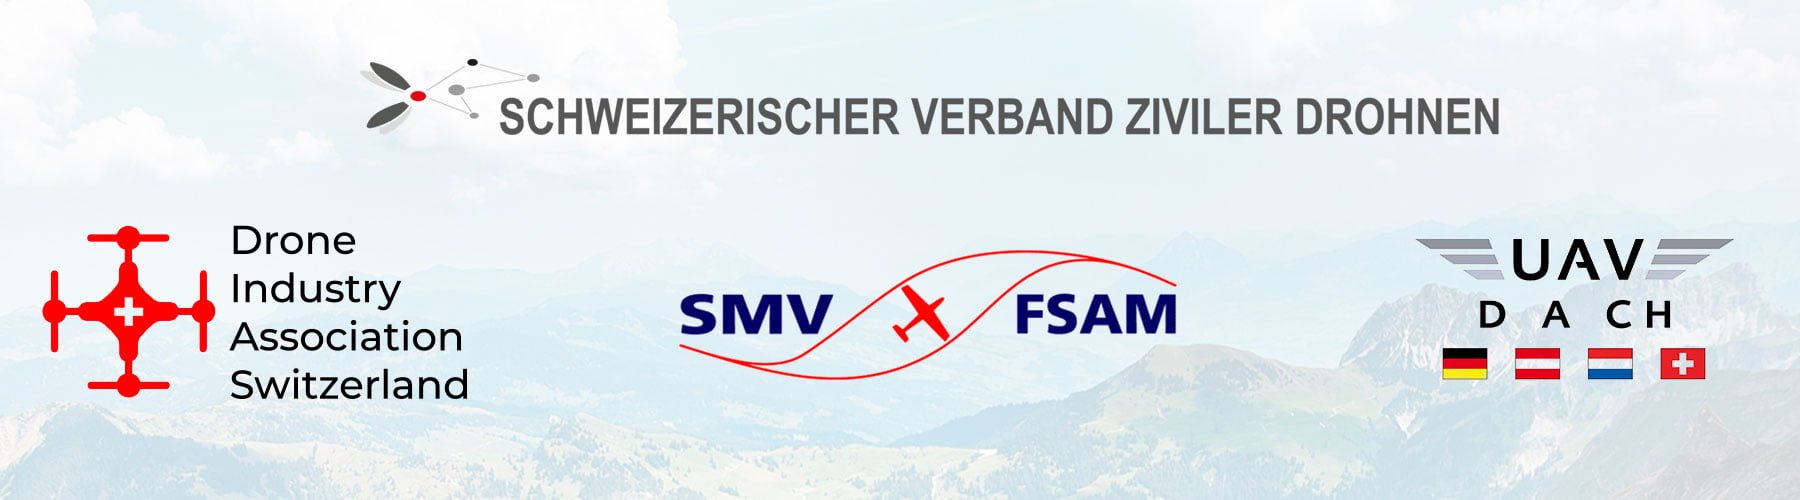 Associations-in-Swiss-Drone-Ecosystem